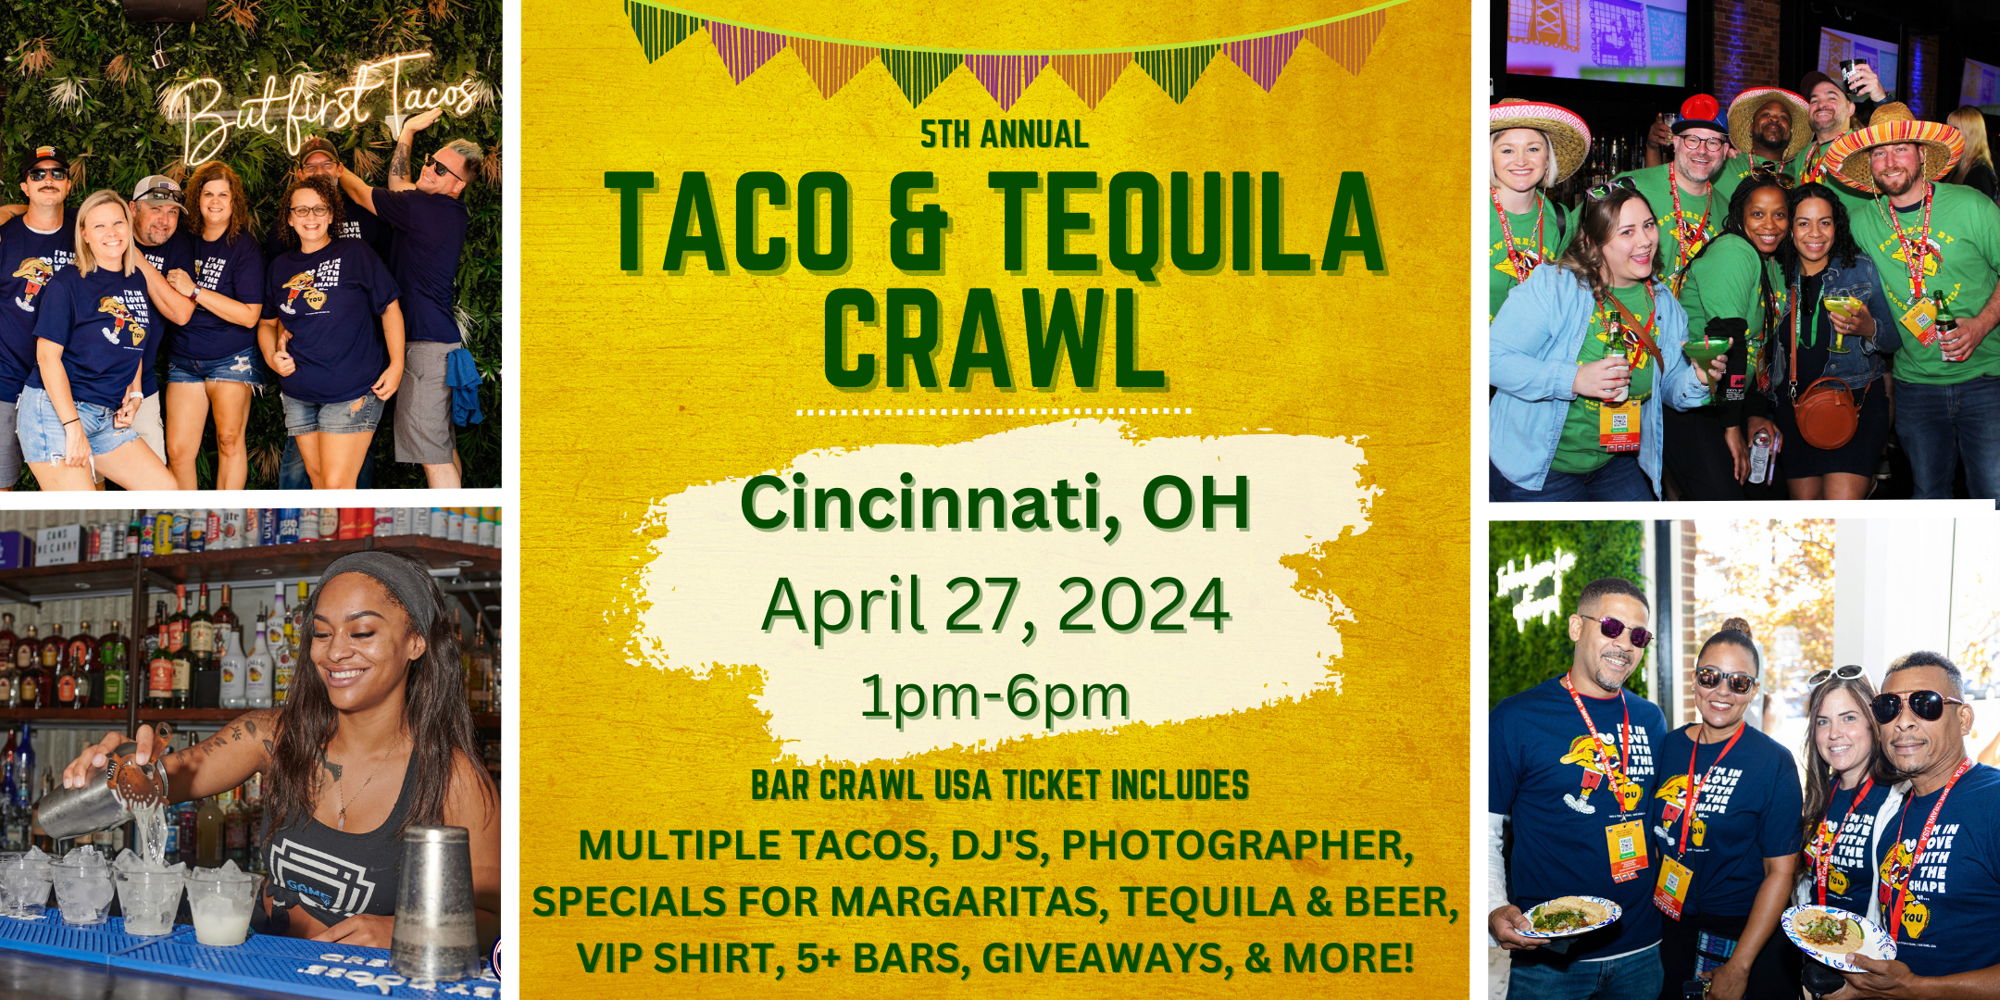 Cincinnati Taco & Tequila Bar Crawl: 5th Annual promotional image